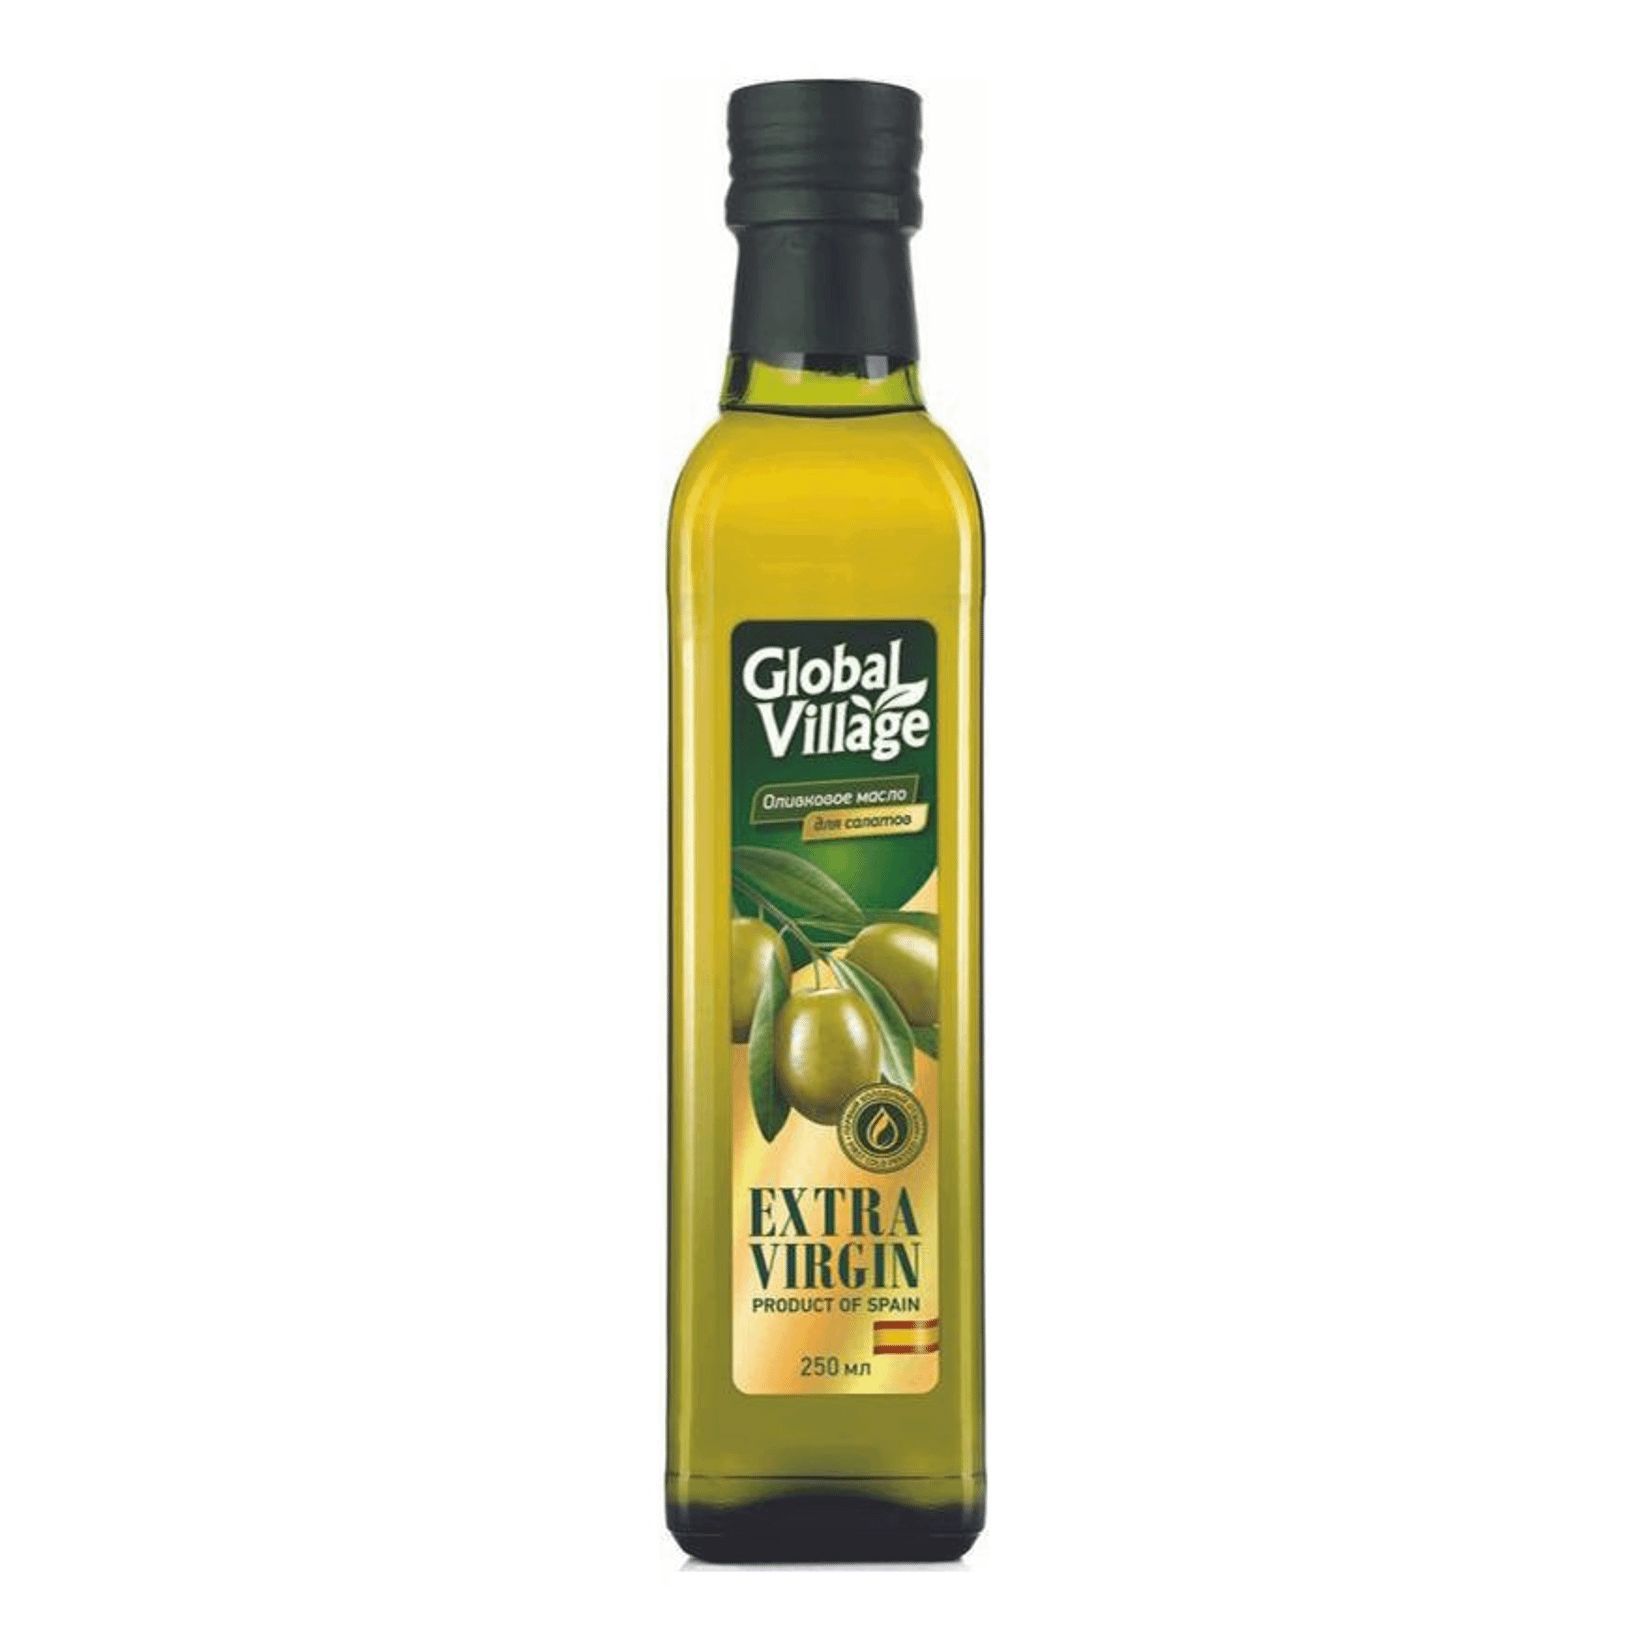 Оливковое масло глобал виладж. Масло оливковое Global Village 250мл. Масло оливковое Глобал Виладж 250. Оливковое масло Глобал Вилладж Экстра Вирджин. Оливковое масло Экстра Вирджин.